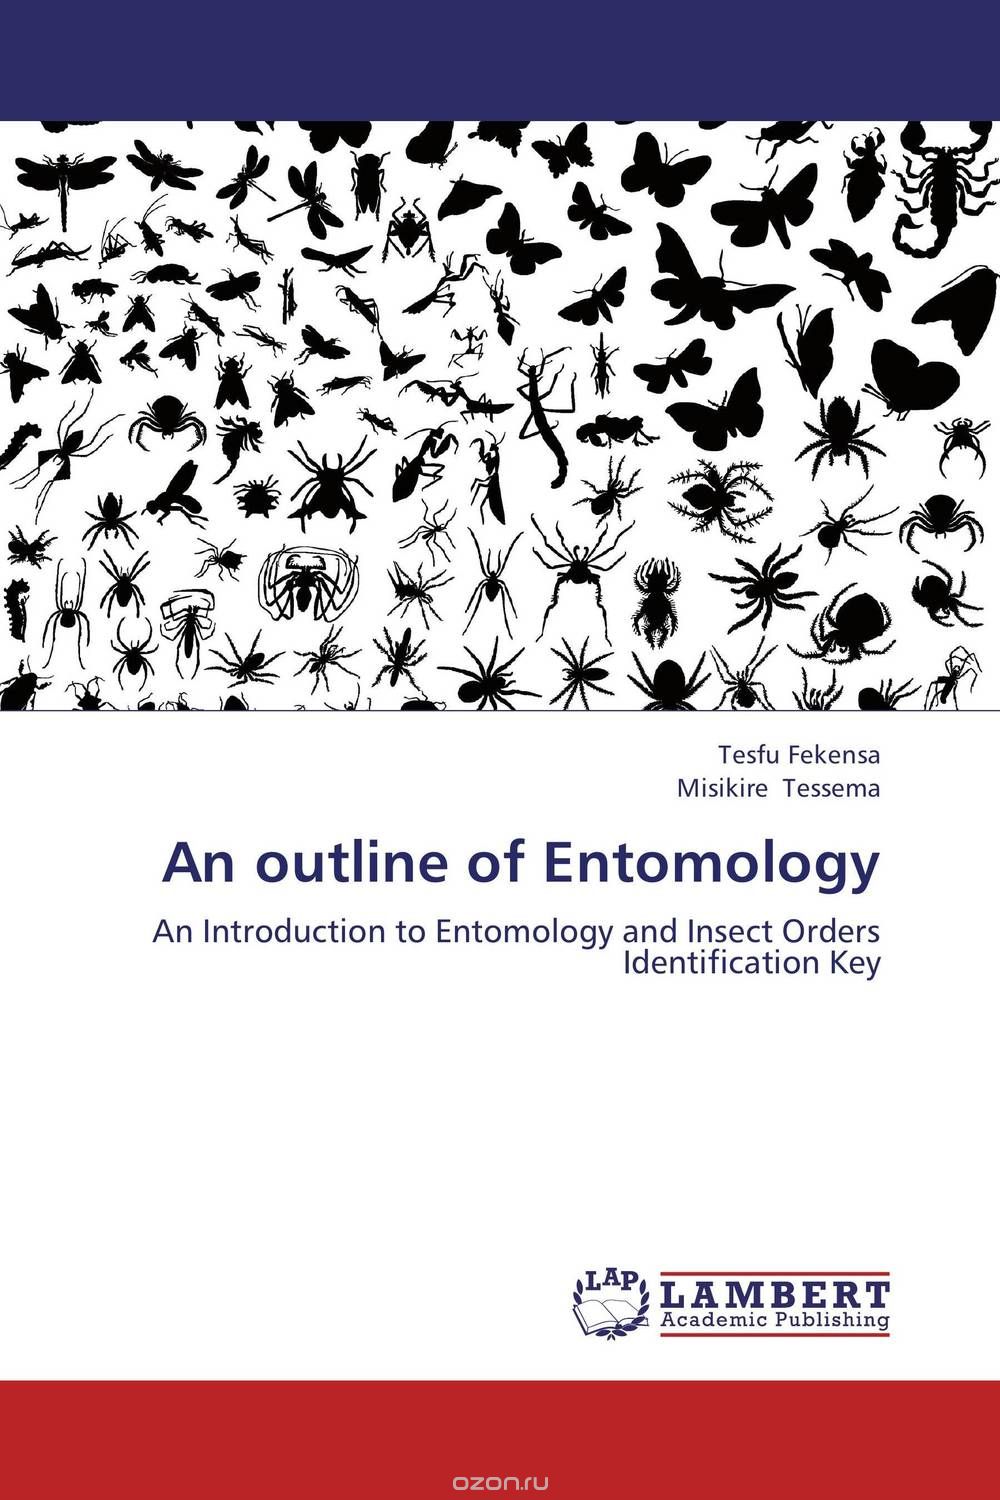 An outline of Entomology